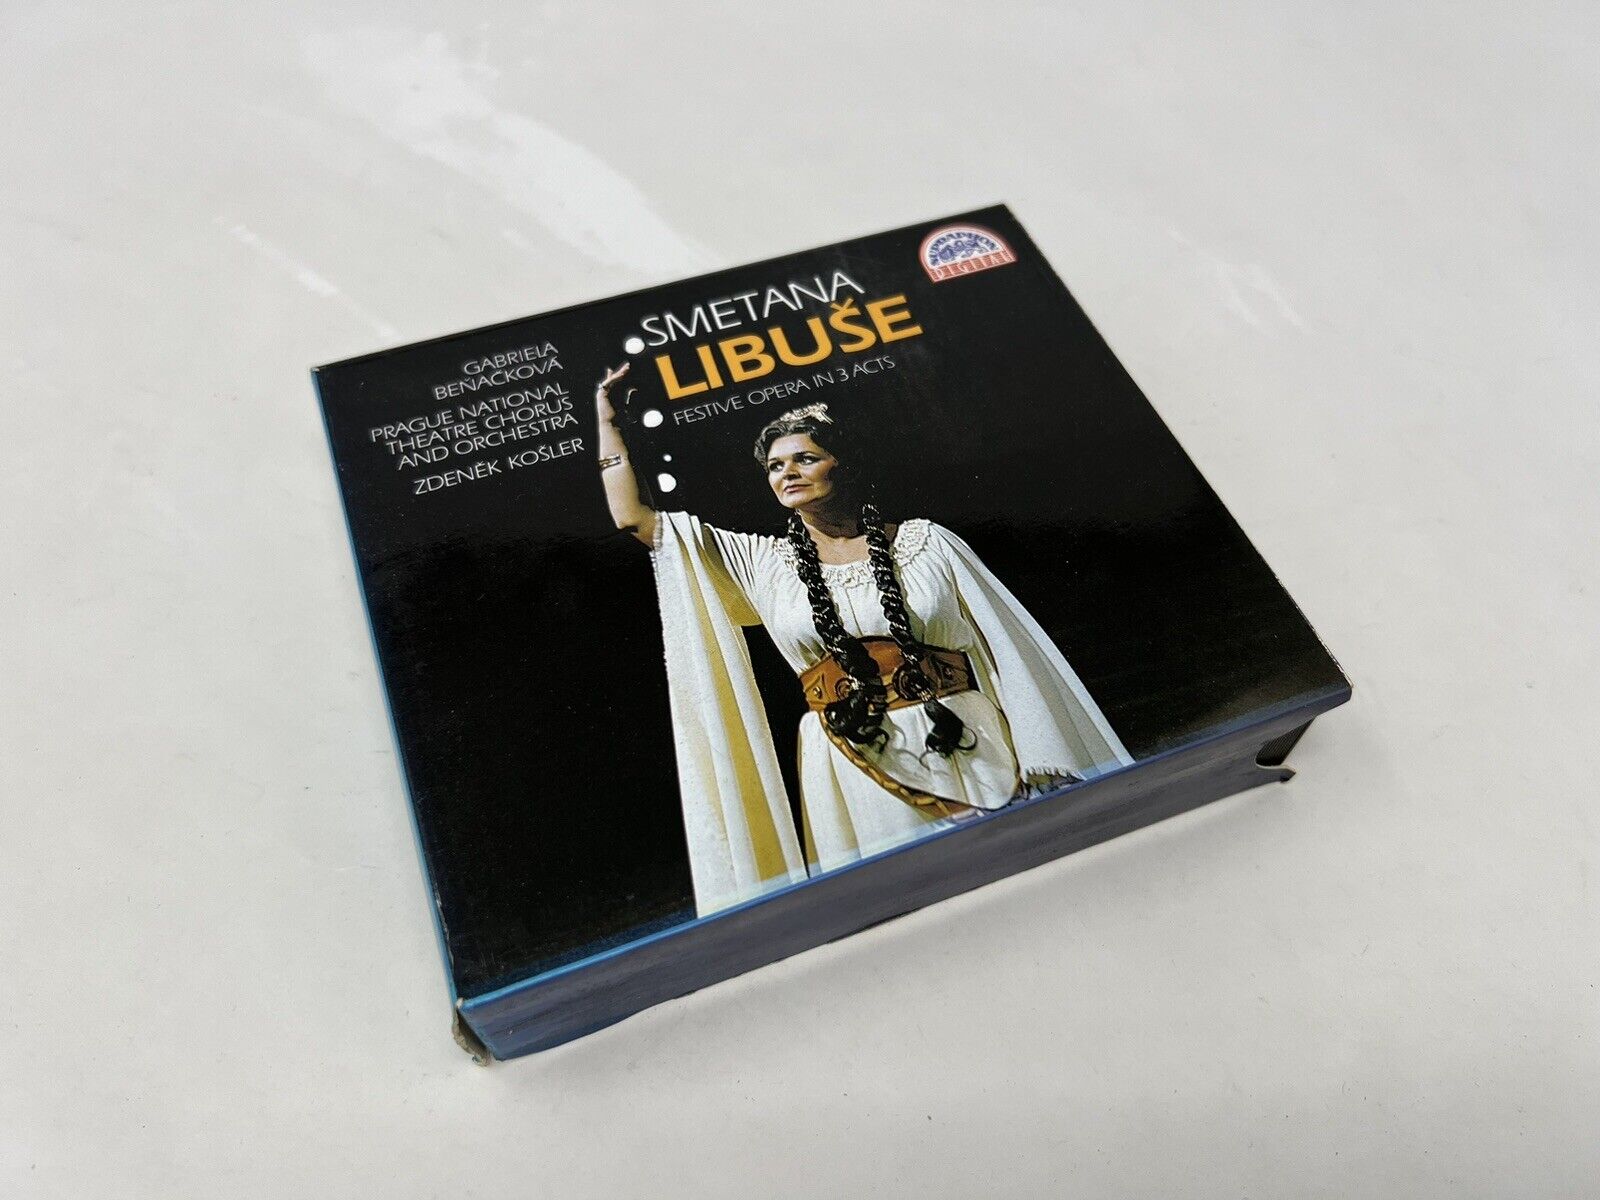 Smetana Libuse GABRIELA BENACKOVA ZDENEK KOSLER Original Supraphon 3CD Box